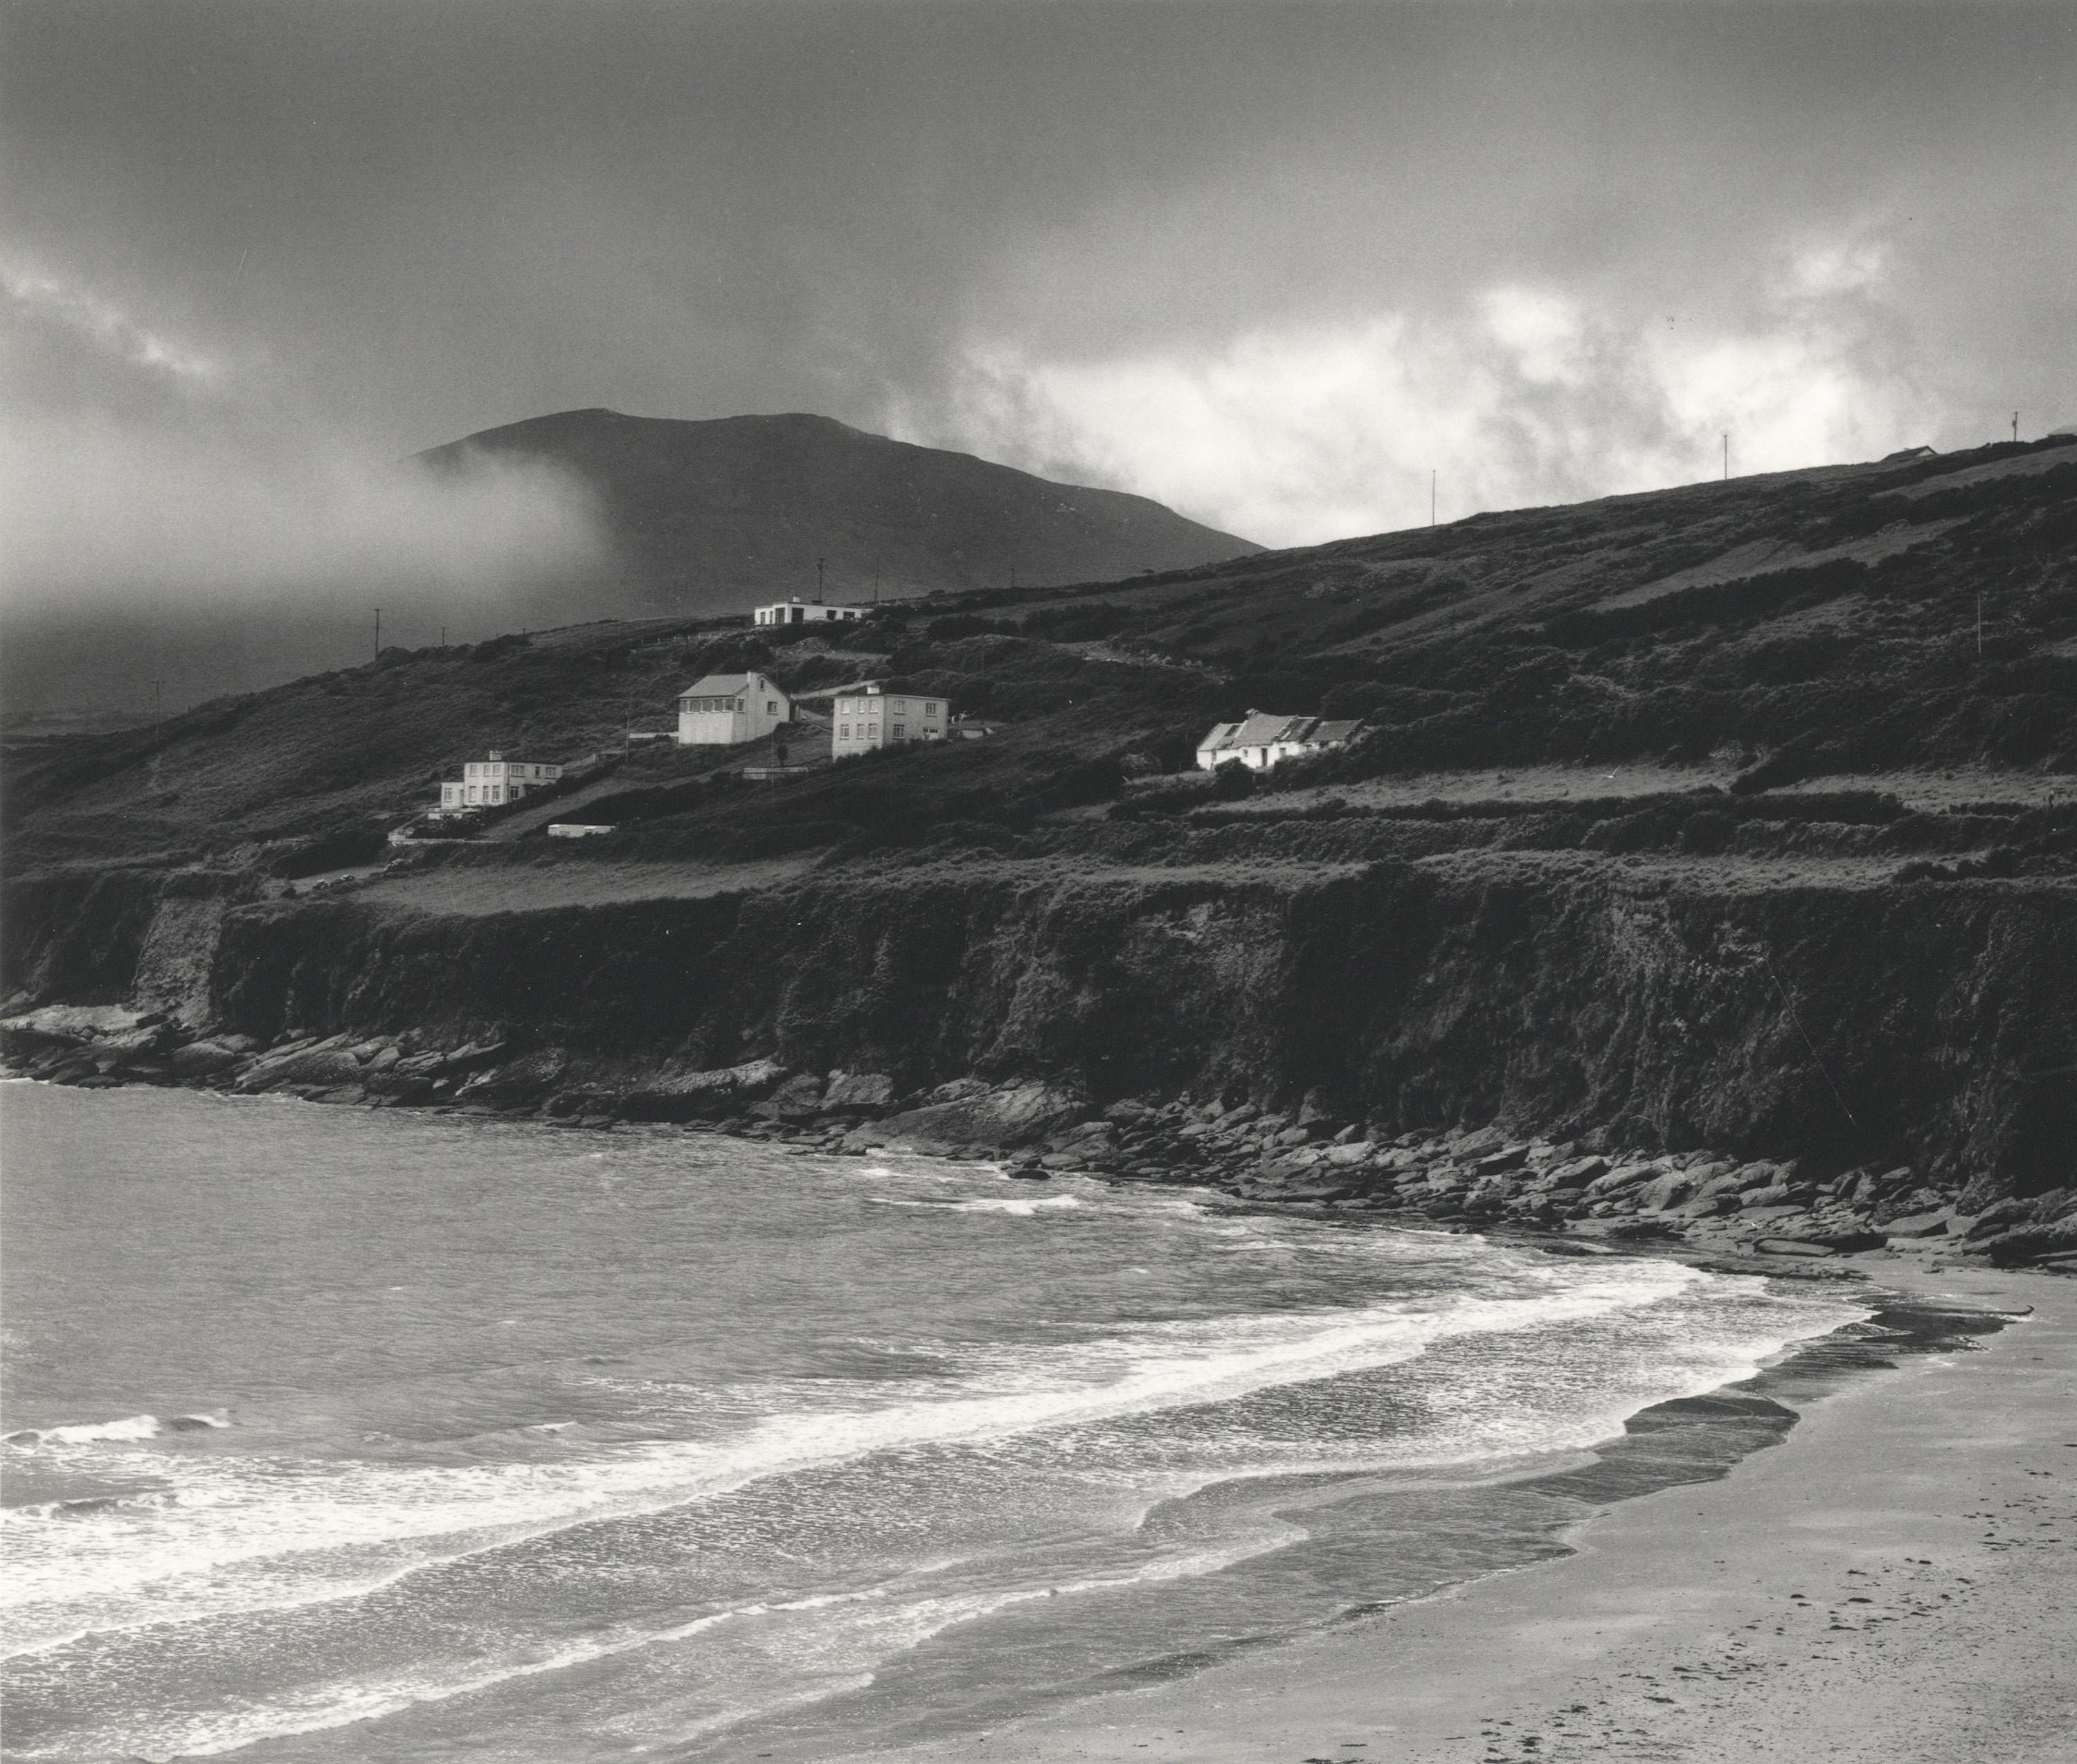 Pentti Sammallahti Portrait Photograph - Inch, Co. Kerry, Ireland (Landscape ocean and cliffs)